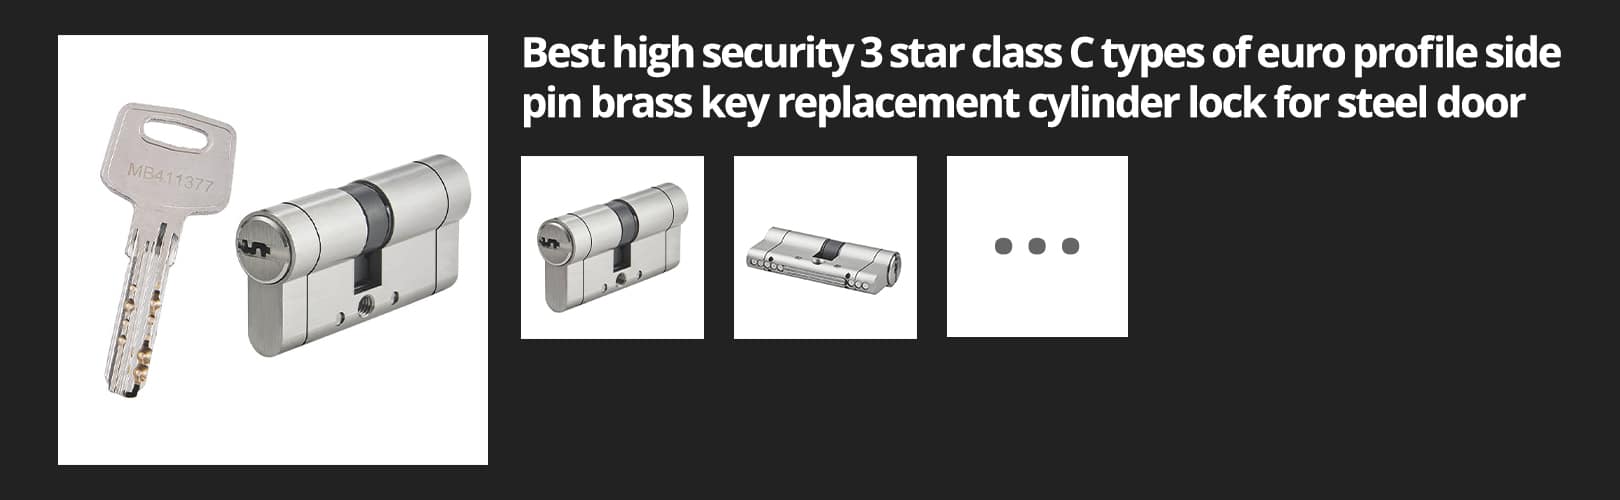 security-lock-cylinder